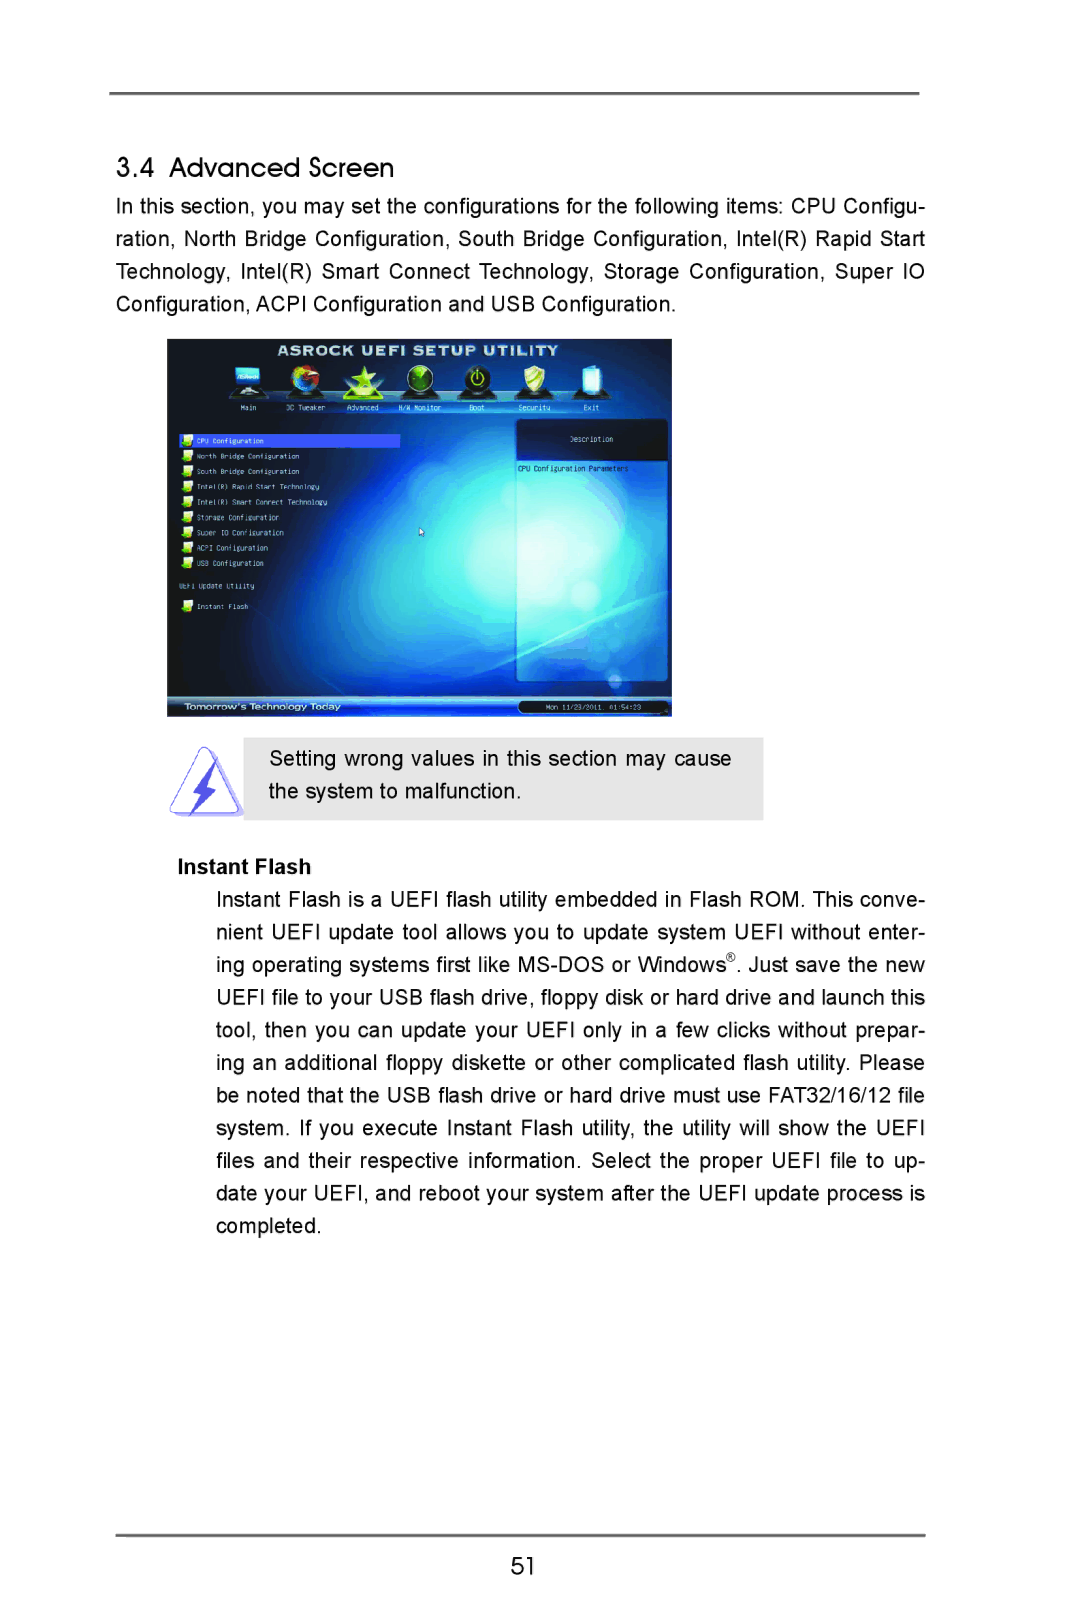 ASRock H77 Pro4/MVP manual Advanced Screen, Instant Flash 